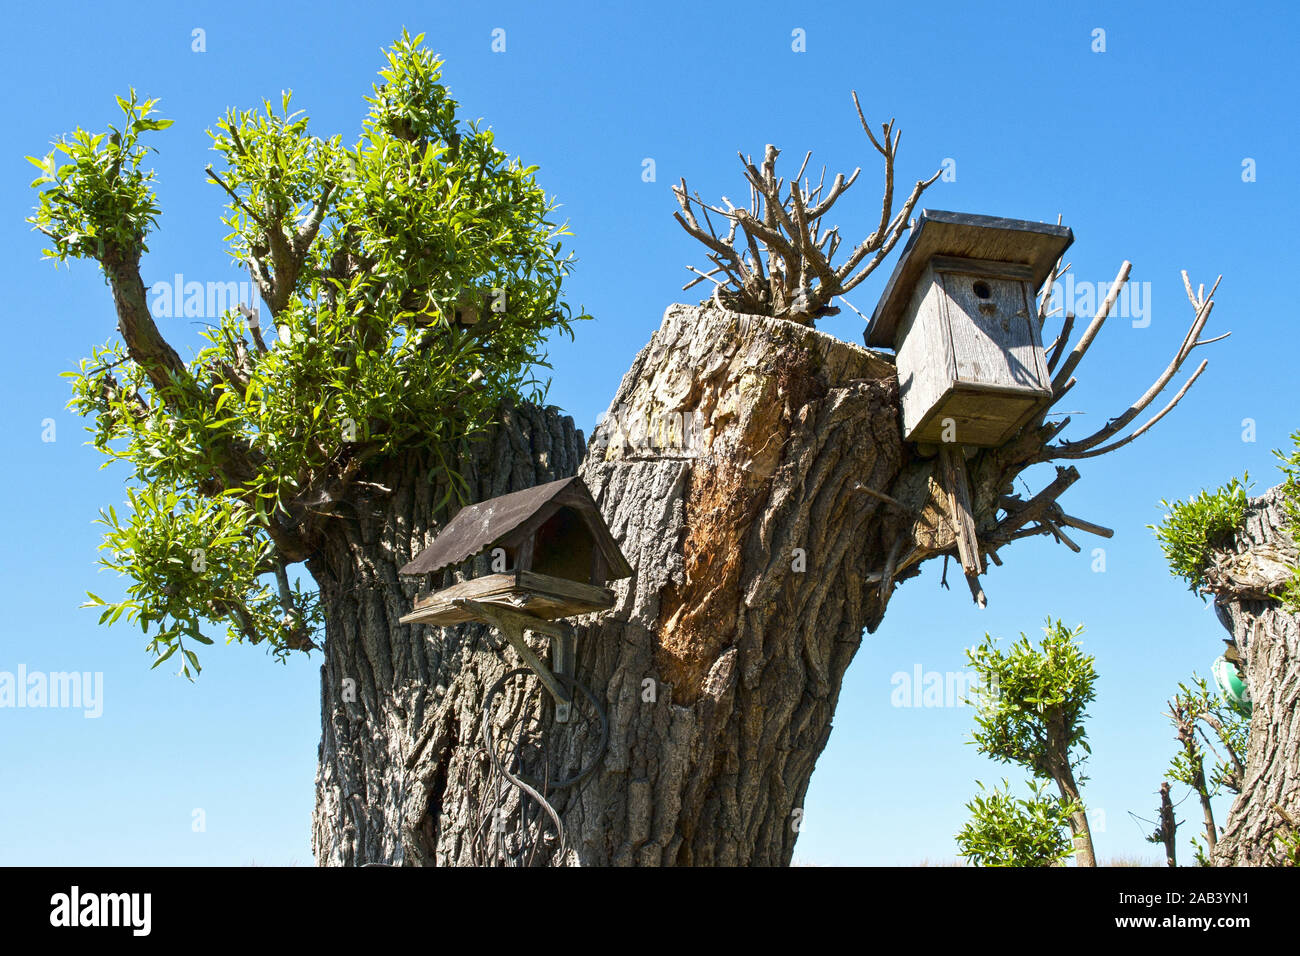 Vogelhaus und Nistkasten un einem Baum |casa di uccelli nidificanti e scatola su un albero| Foto Stock